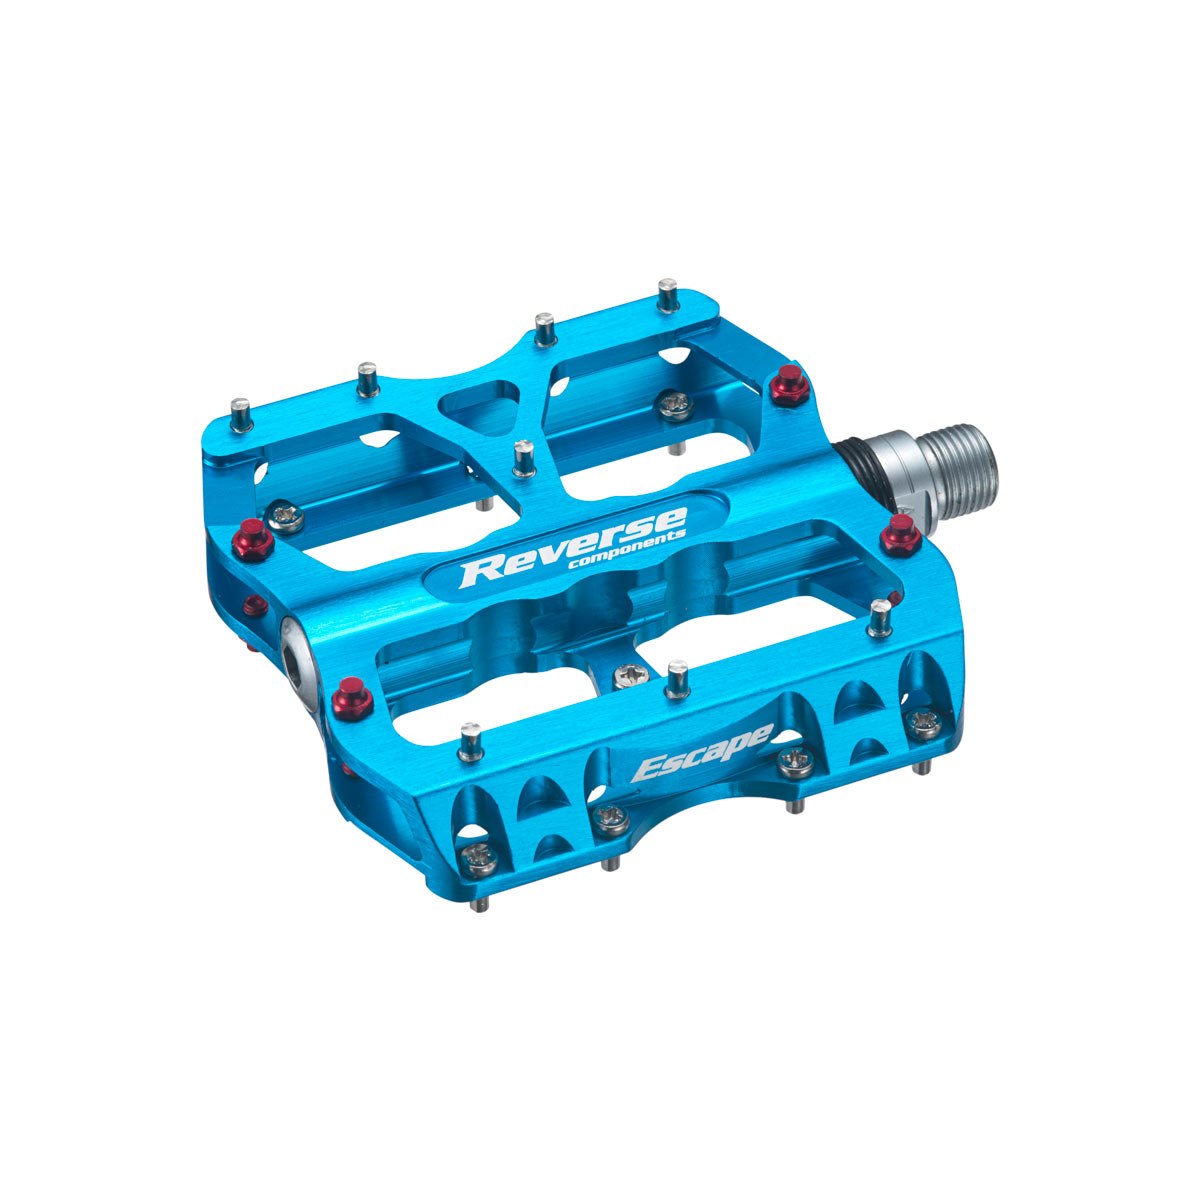 Picture of Reverse Components Escape Pedals - light blue anodized